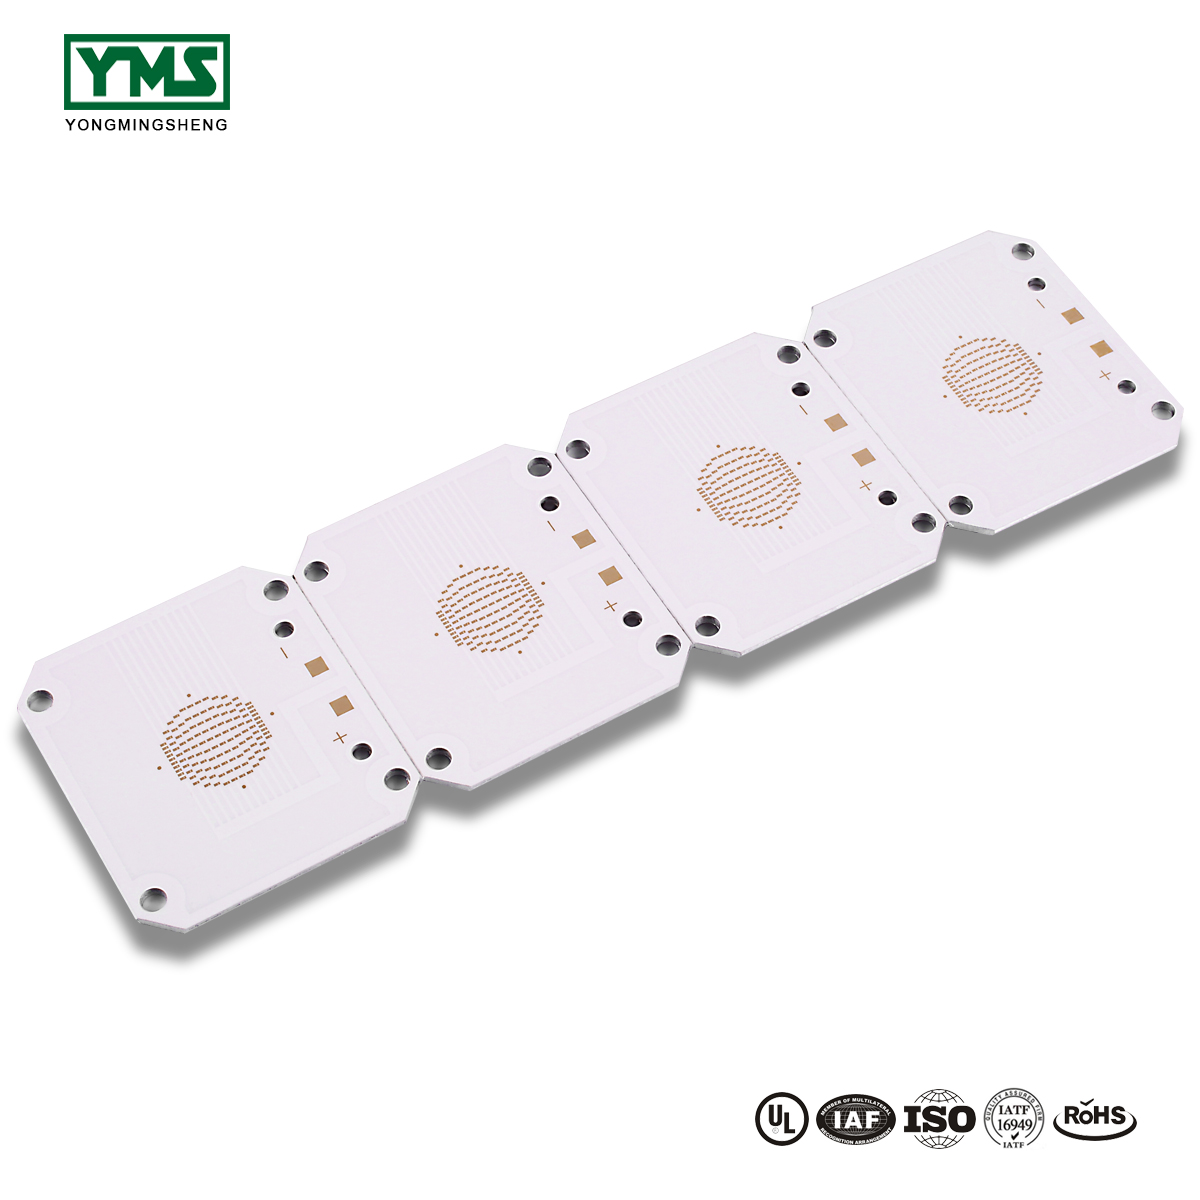 Factory Supply 1050c Ceramic Board - 1Layer Aluminum base Board | YMSPCB – Yongmingsheng